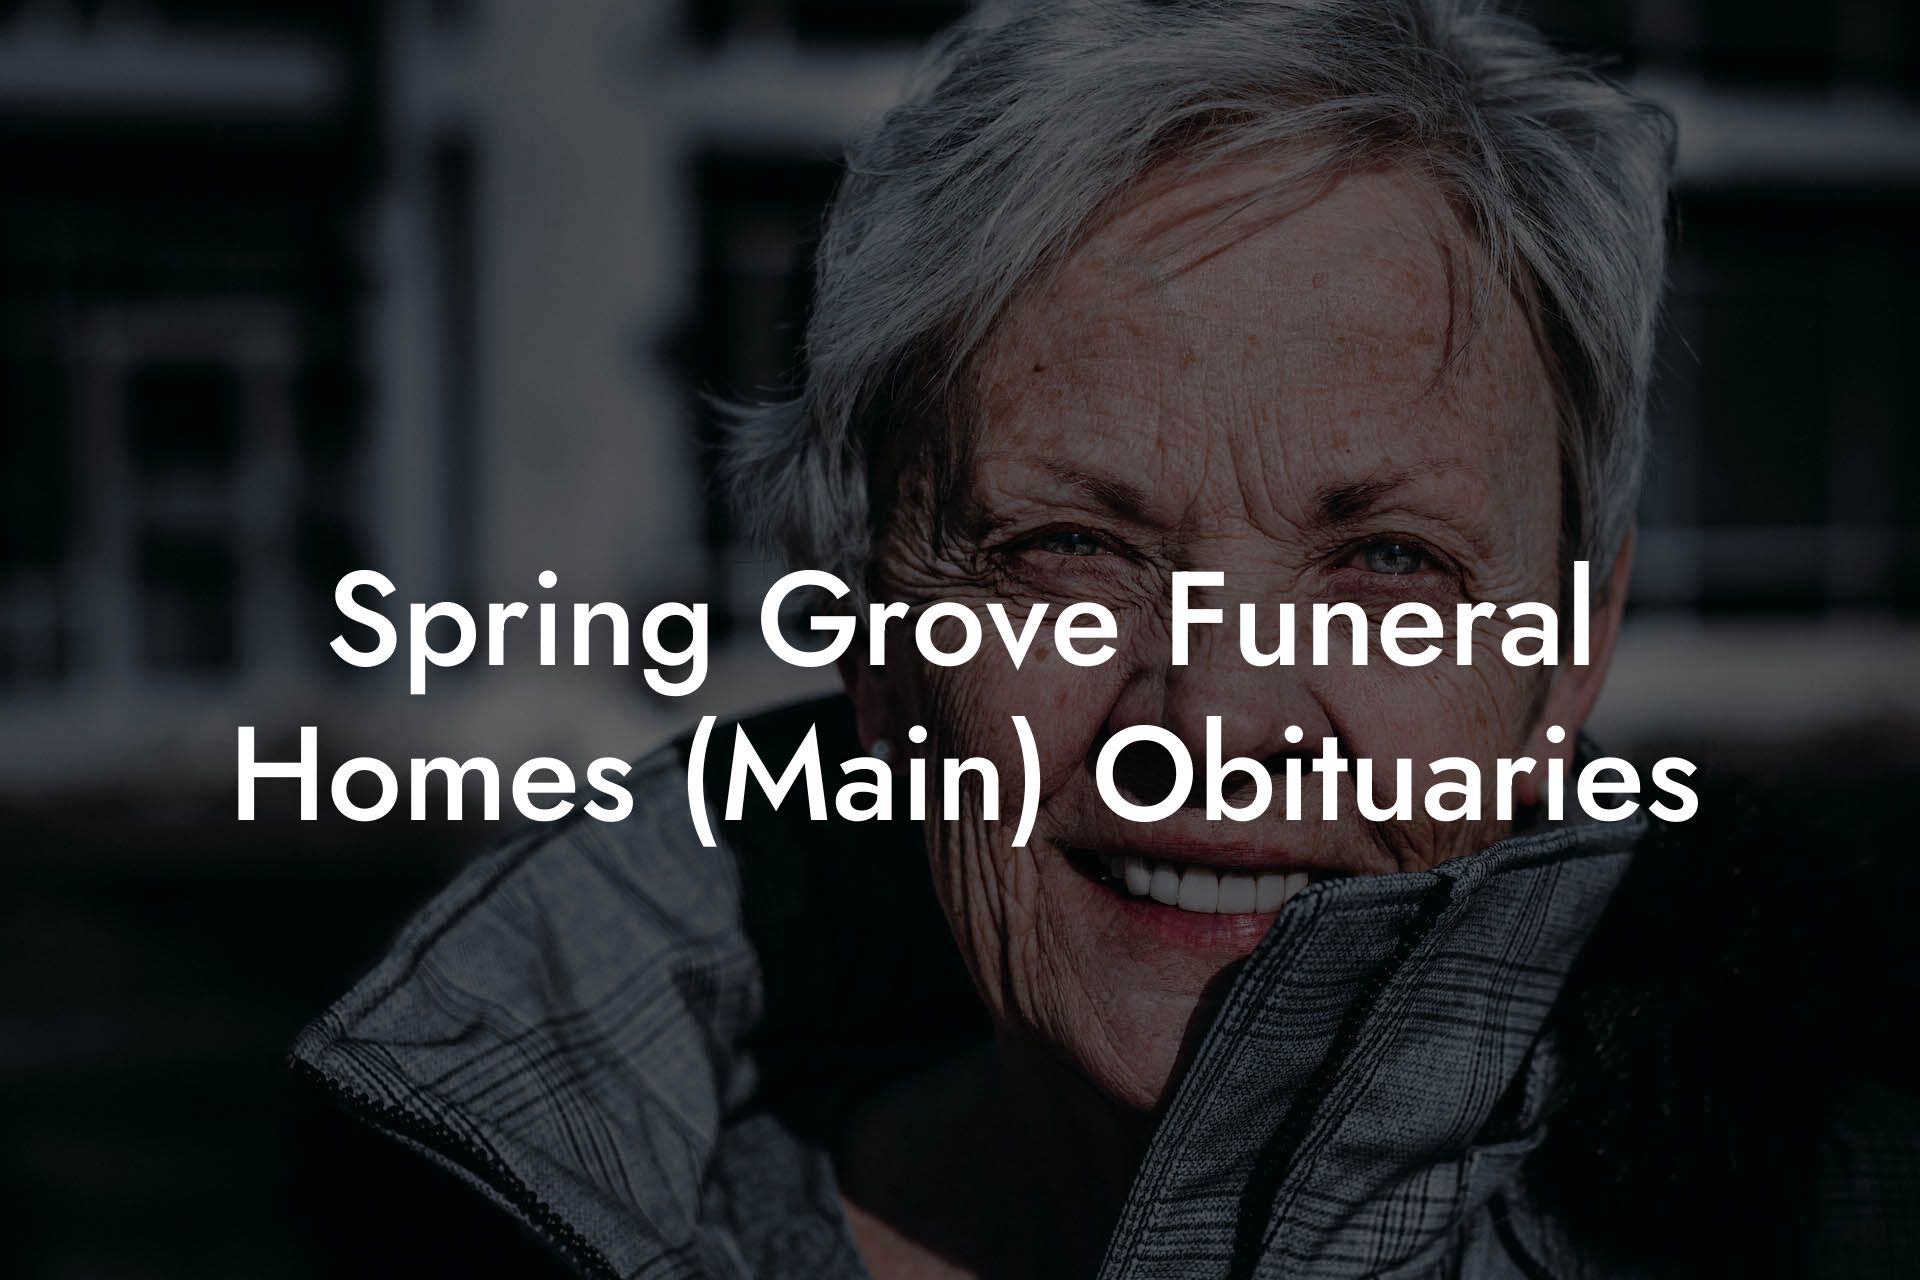 Spring Grove Funeral Homes (Main) Obituaries